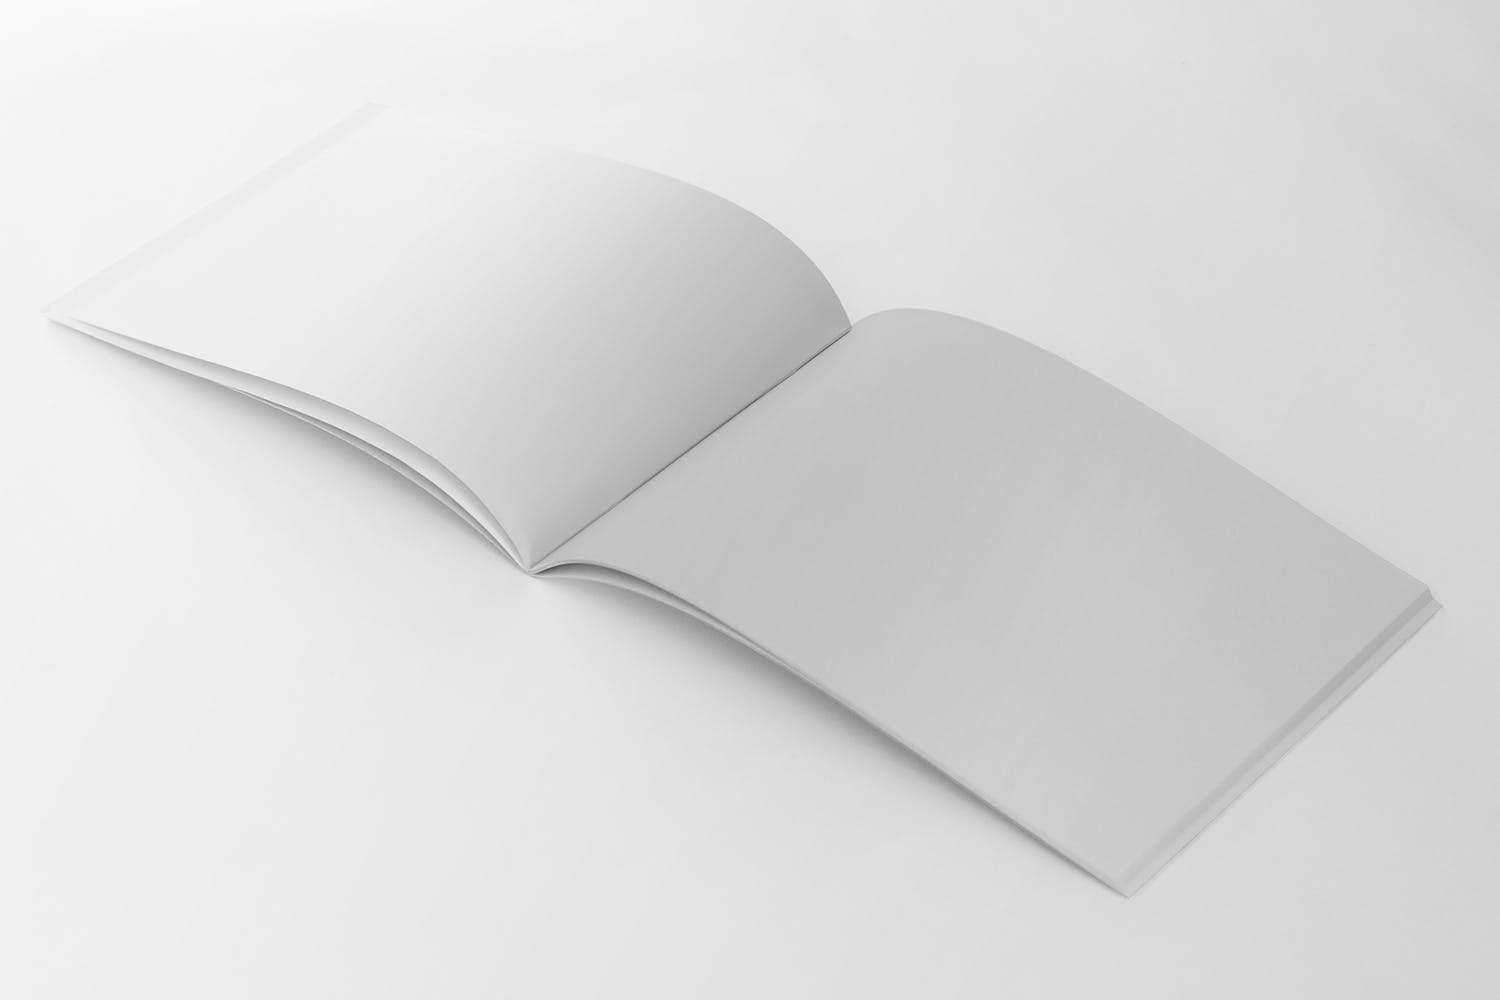 美国信纸规格宣传册内页透视图样机第一素材精选 US Half Letter Brochure Mockup Perspective View插图(1)